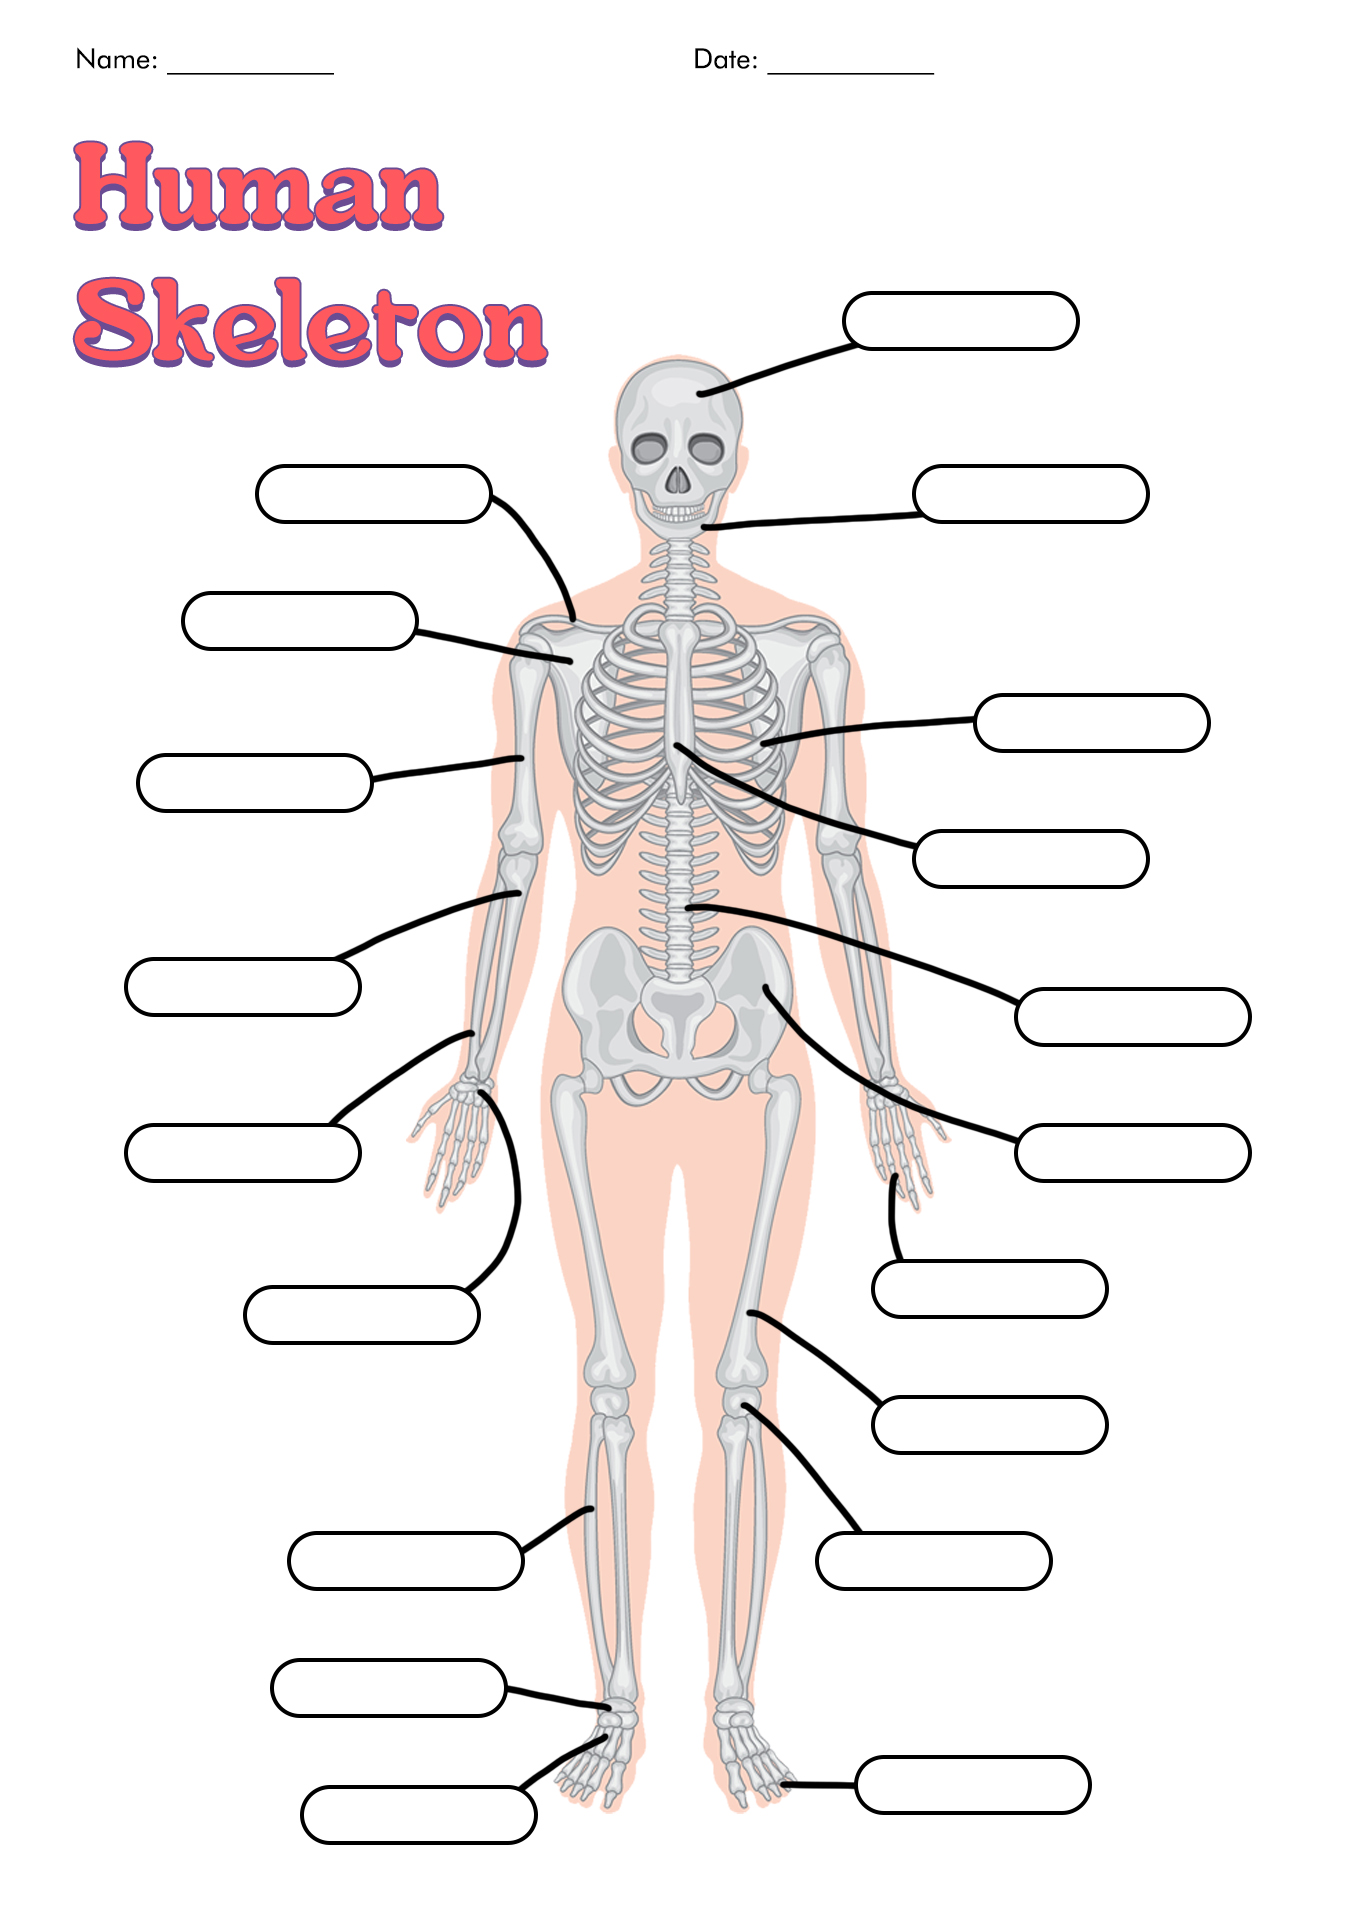 Human Skeleton Template